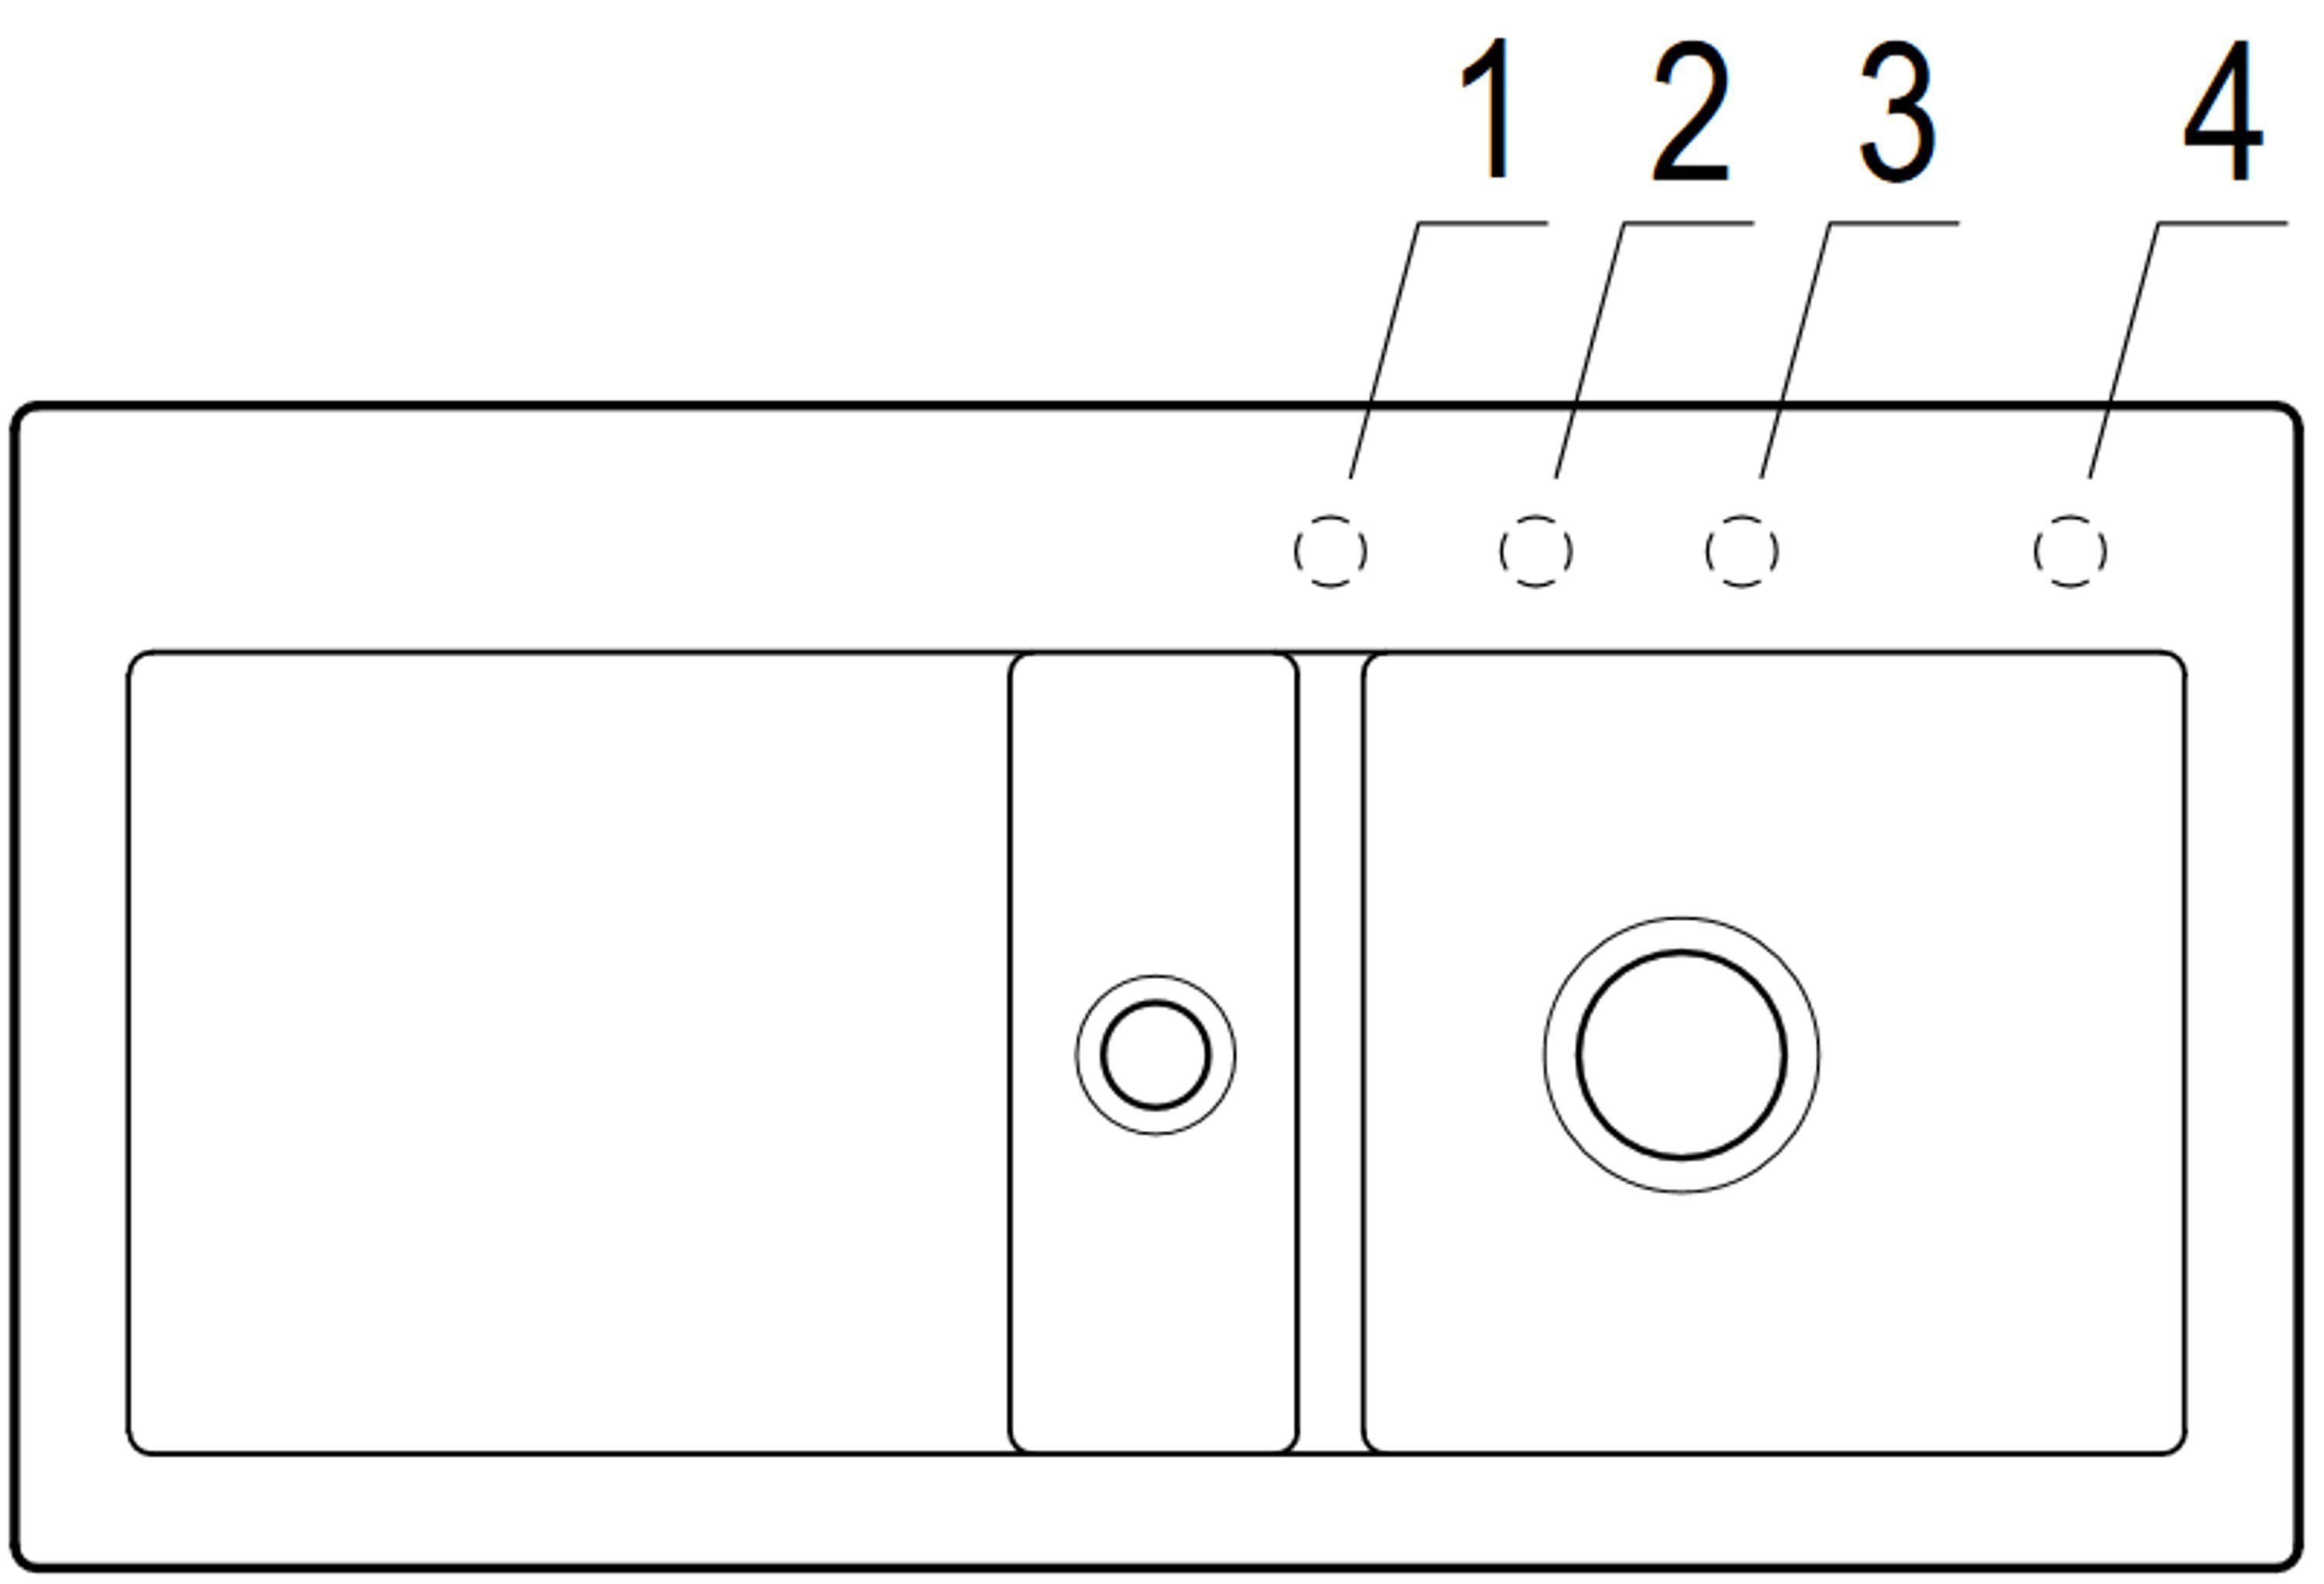 Boch & cm, 02 geschützt, Küchenspüle 6712 Villeroy Becken 100/22 links möglich i4, und Geschmacksmuster Rechteckig, rechts